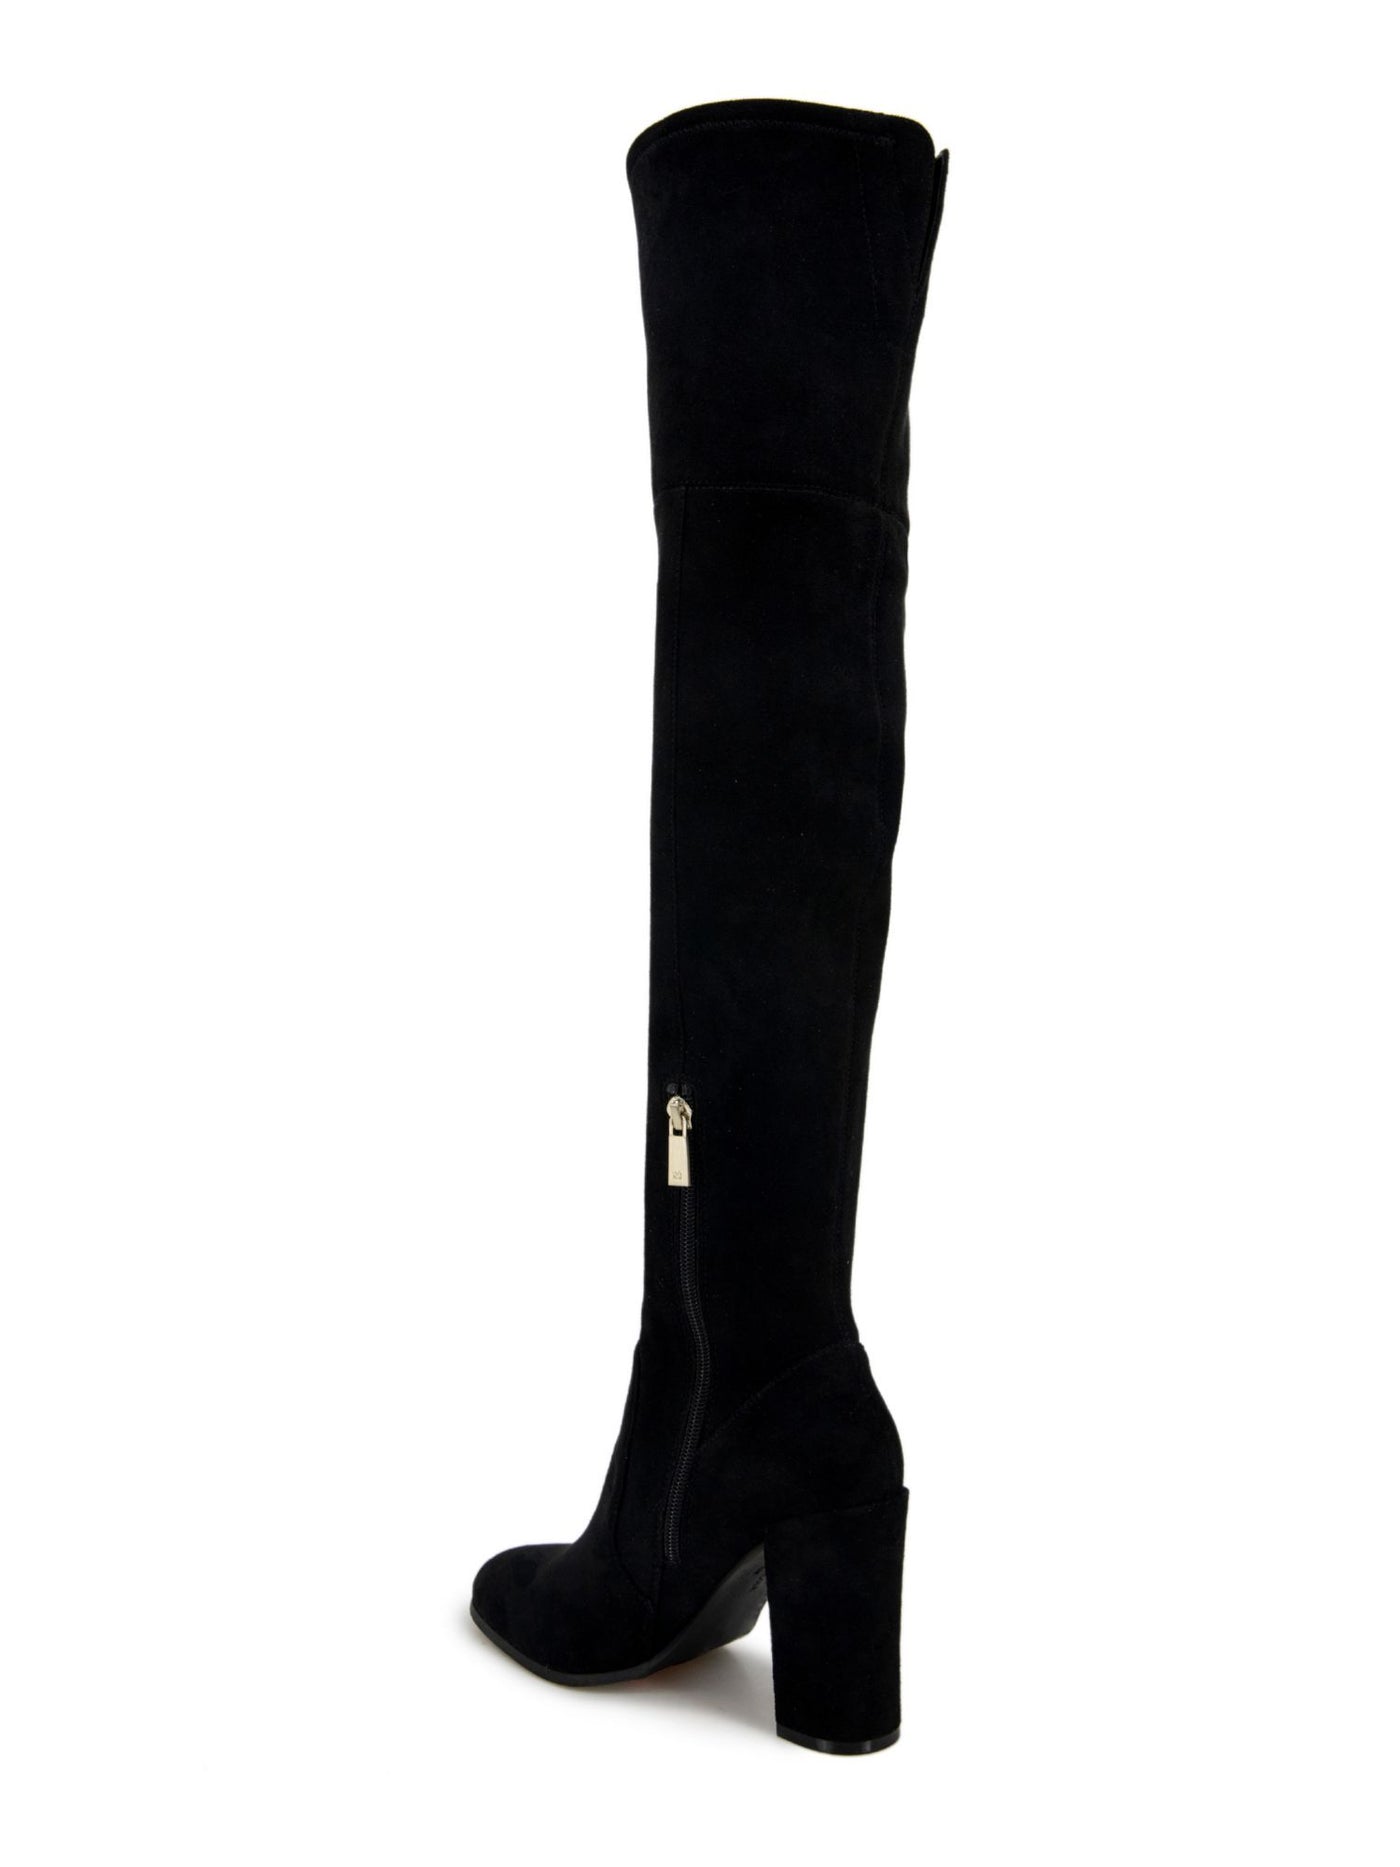 KENNETH COLE NEW YORK Womens Black Inside Half Zip Justin Round Toe Block Heel Dress Boots 9.5 M